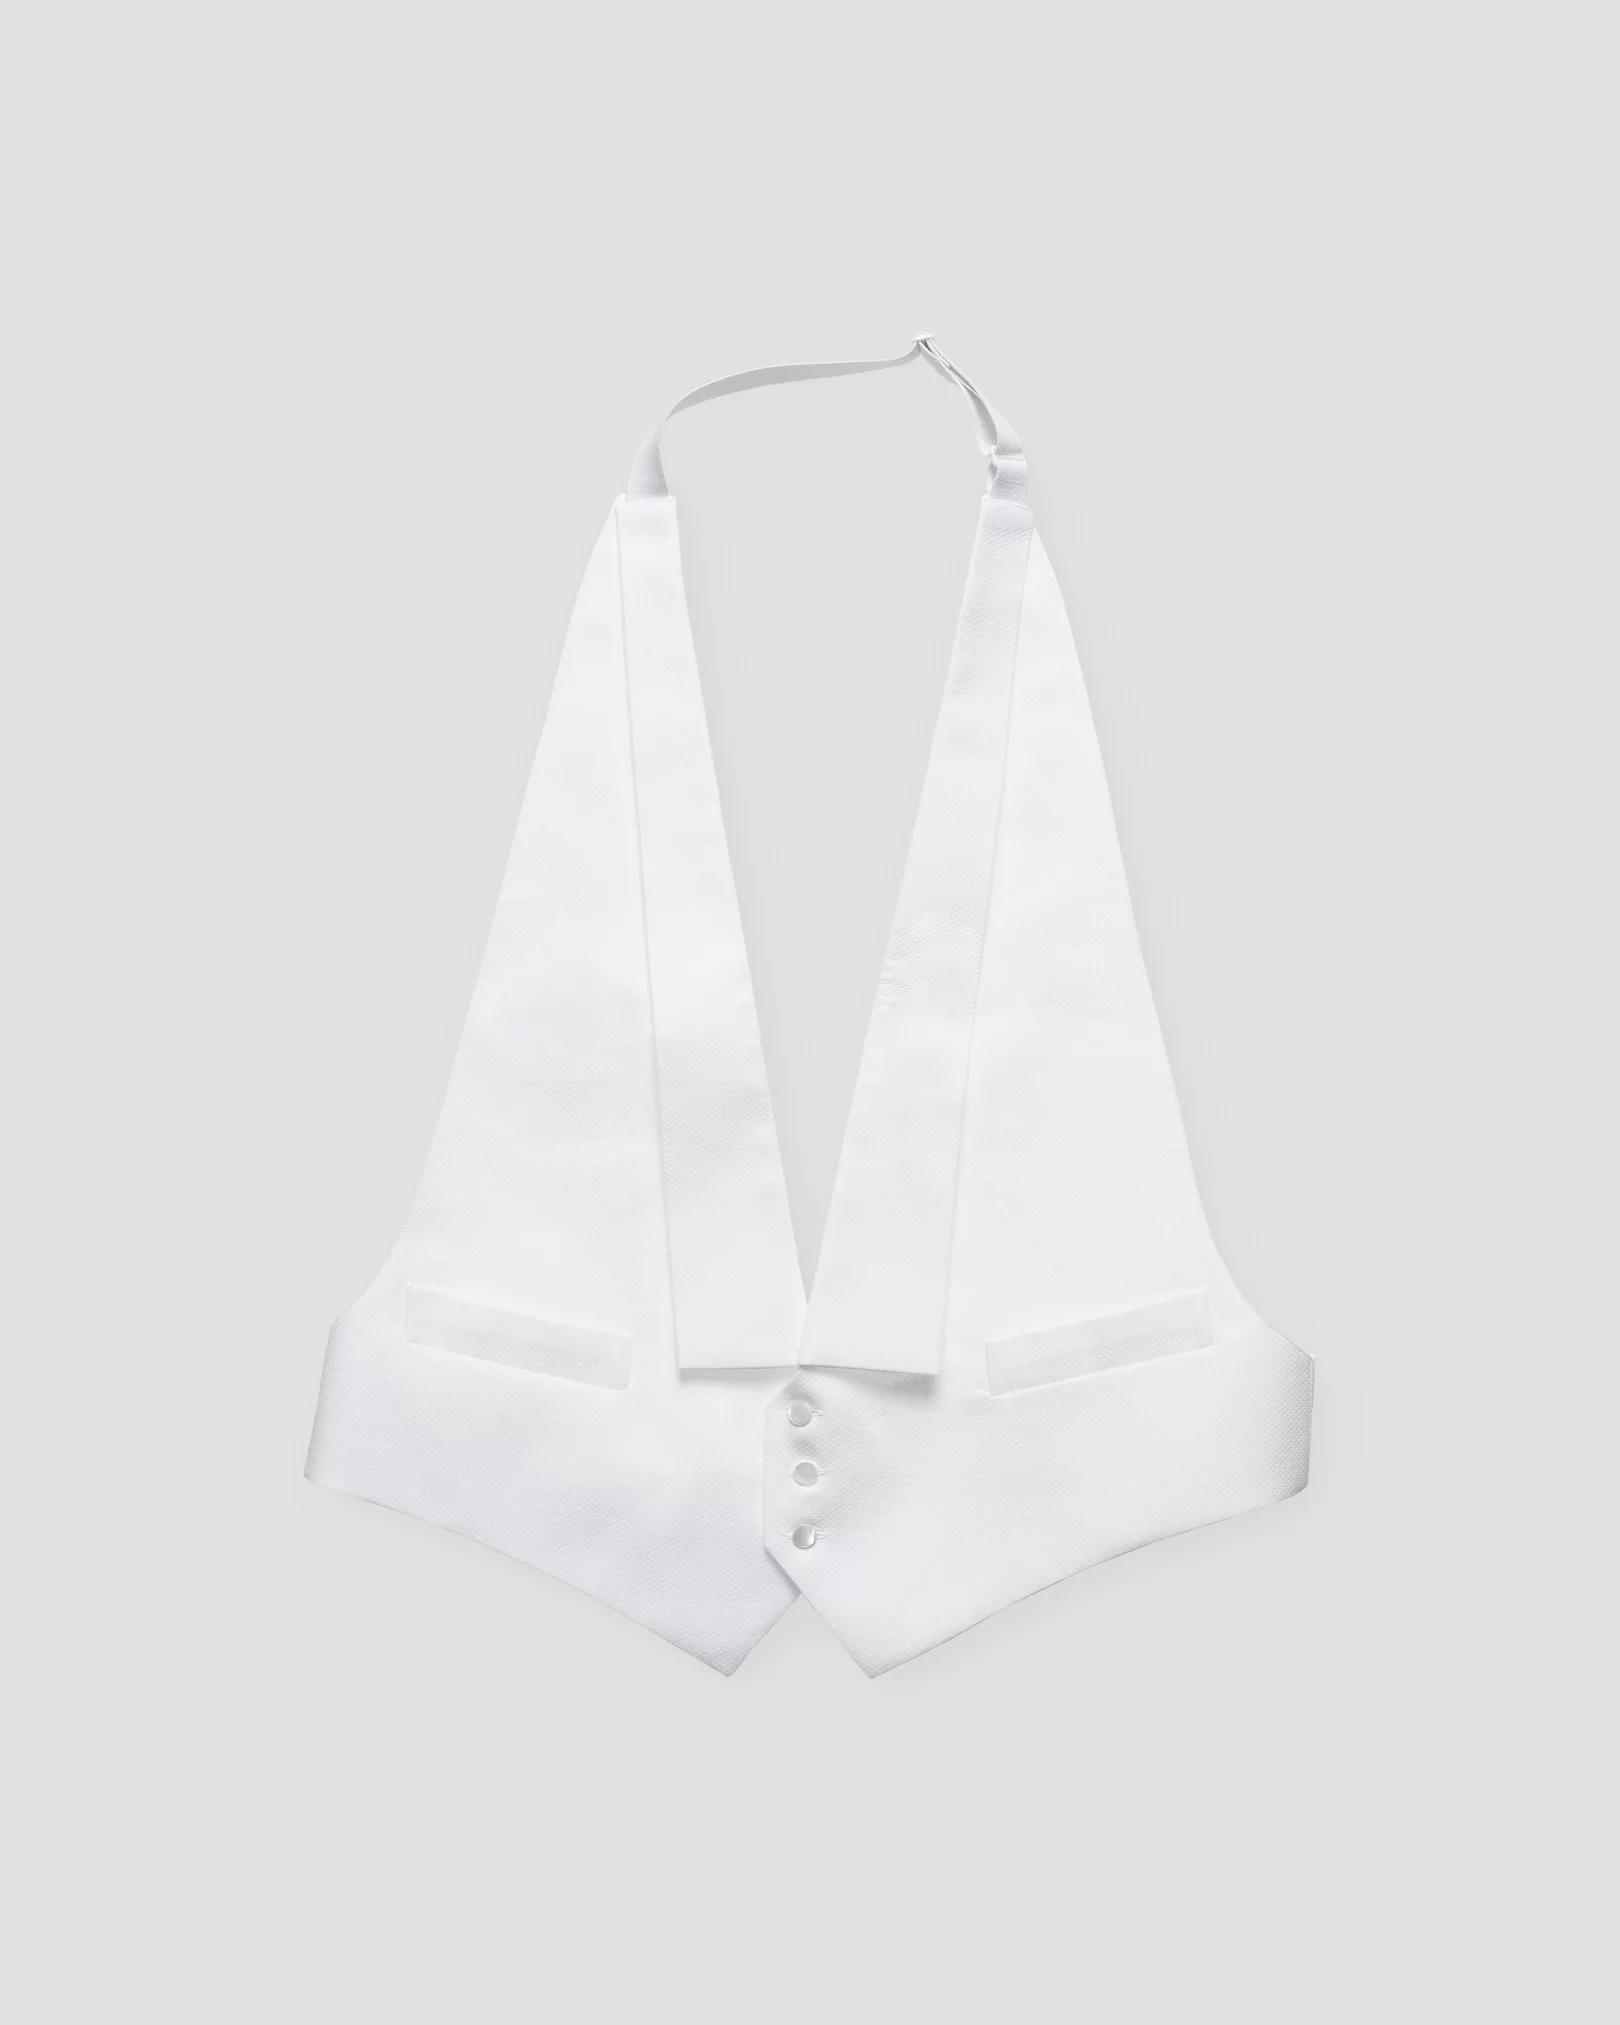 Eton - white tie vest